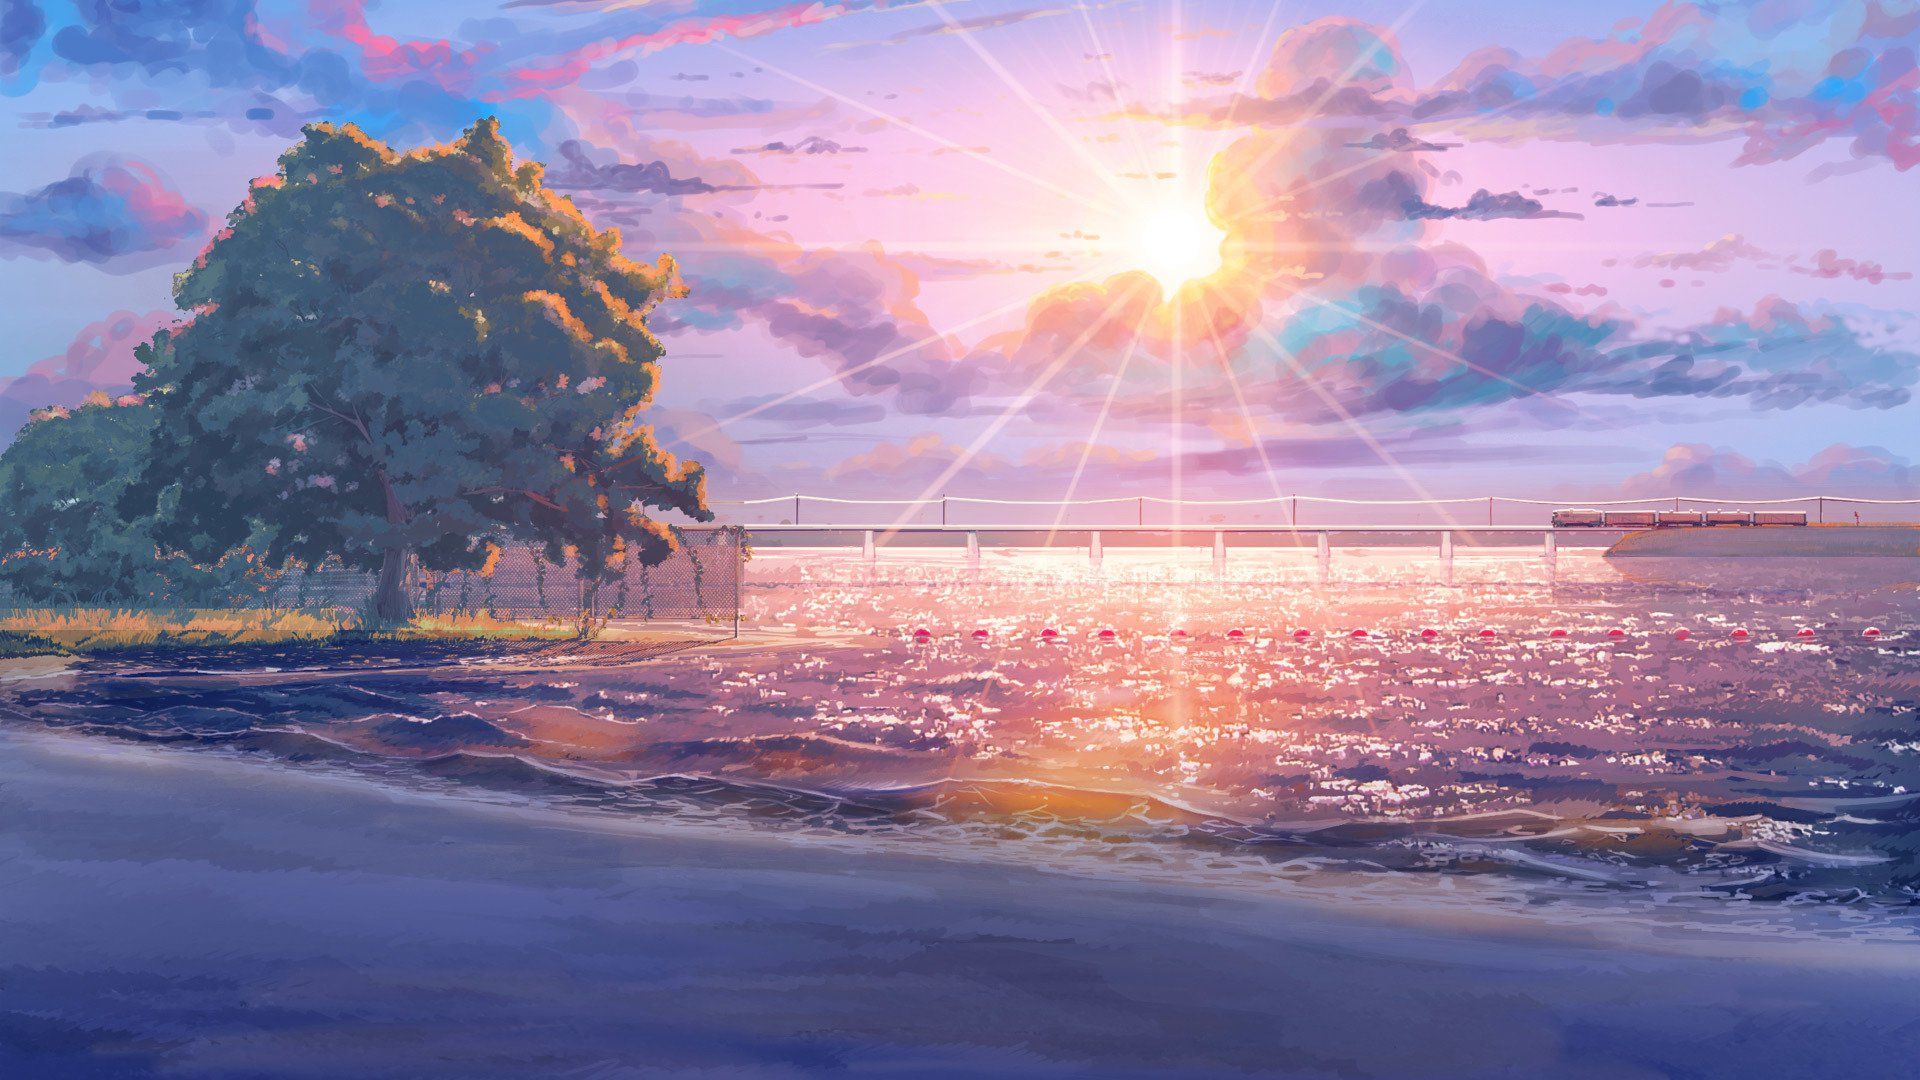 Anime Art Style Environment Background Image Stock Illustration 2198272797  | Shutterstock